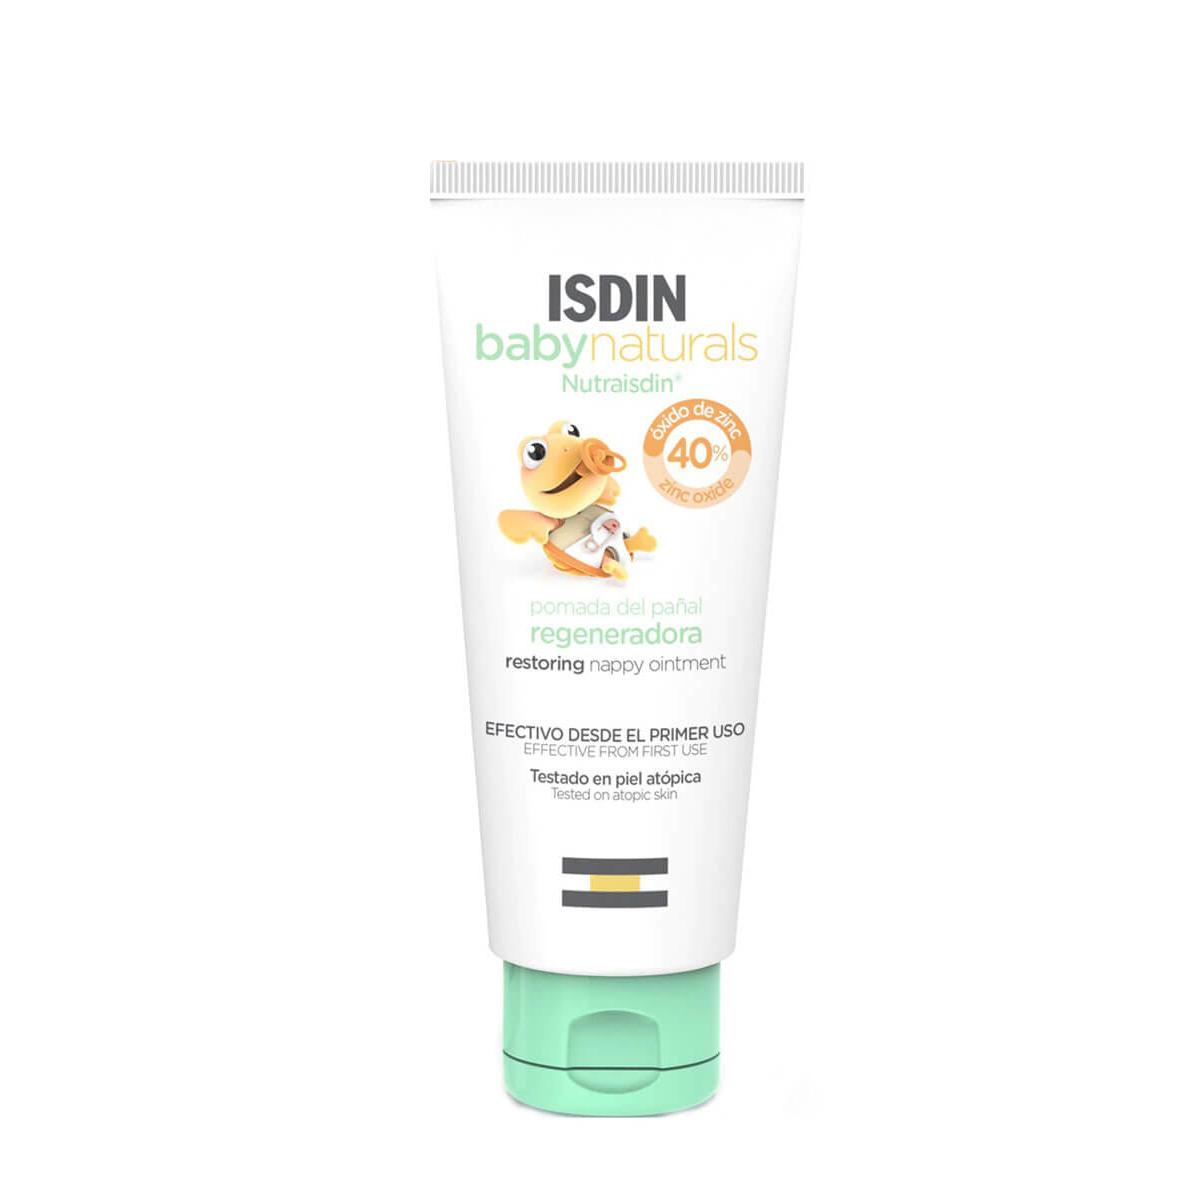 Isdin - Isdin baby naturals pomada del pañal regeneradora 100ml